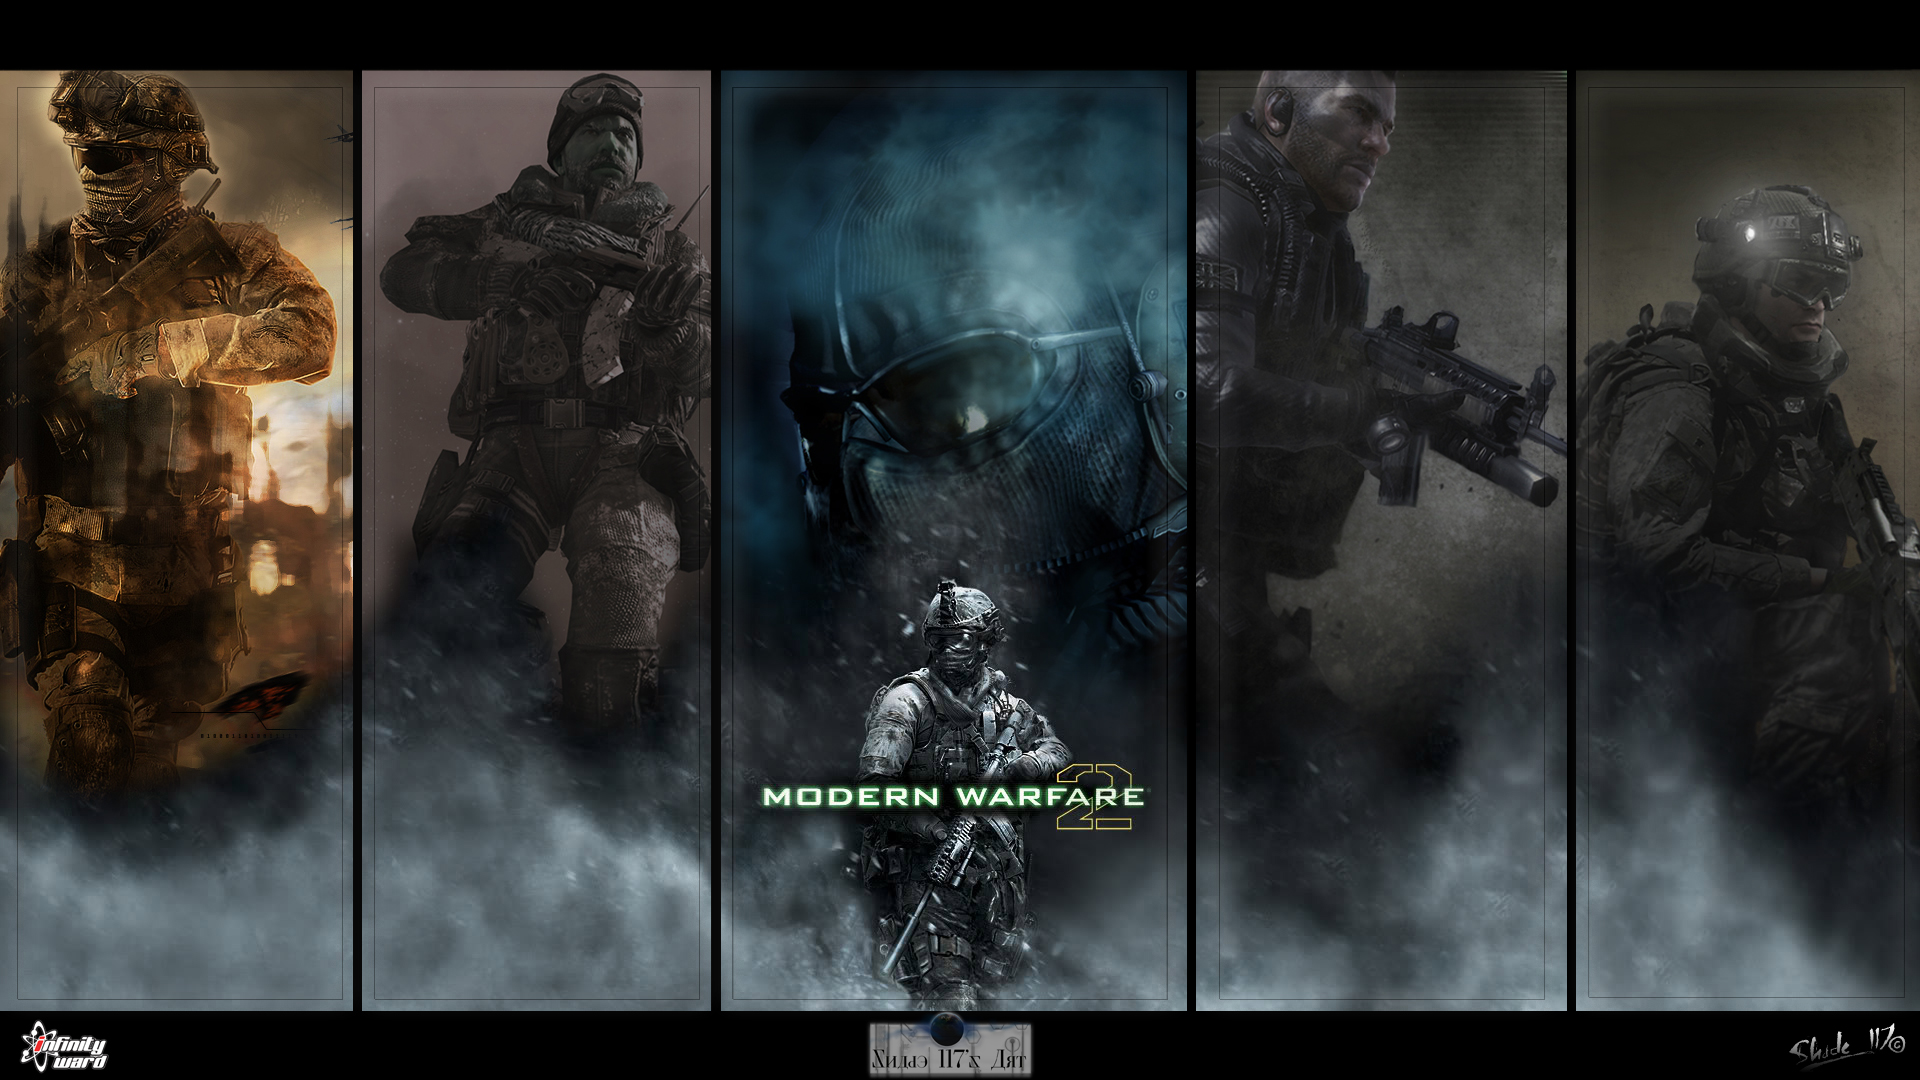 Modern Warfare Cod Wallpaper Equot Espanol Steam Shade Juegos